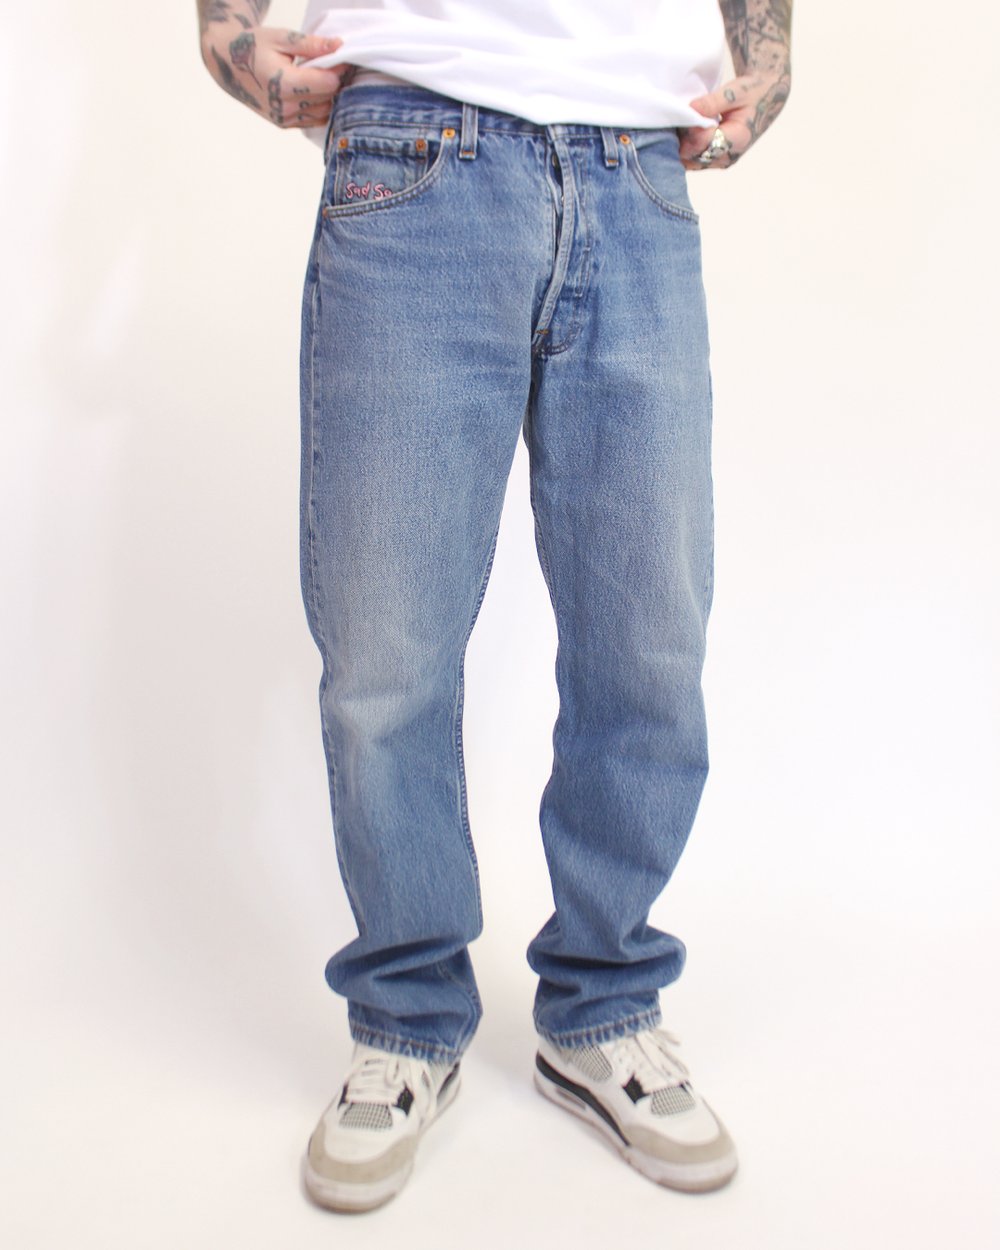 Image of "dvl bb” denim jeans (stonewash blue)